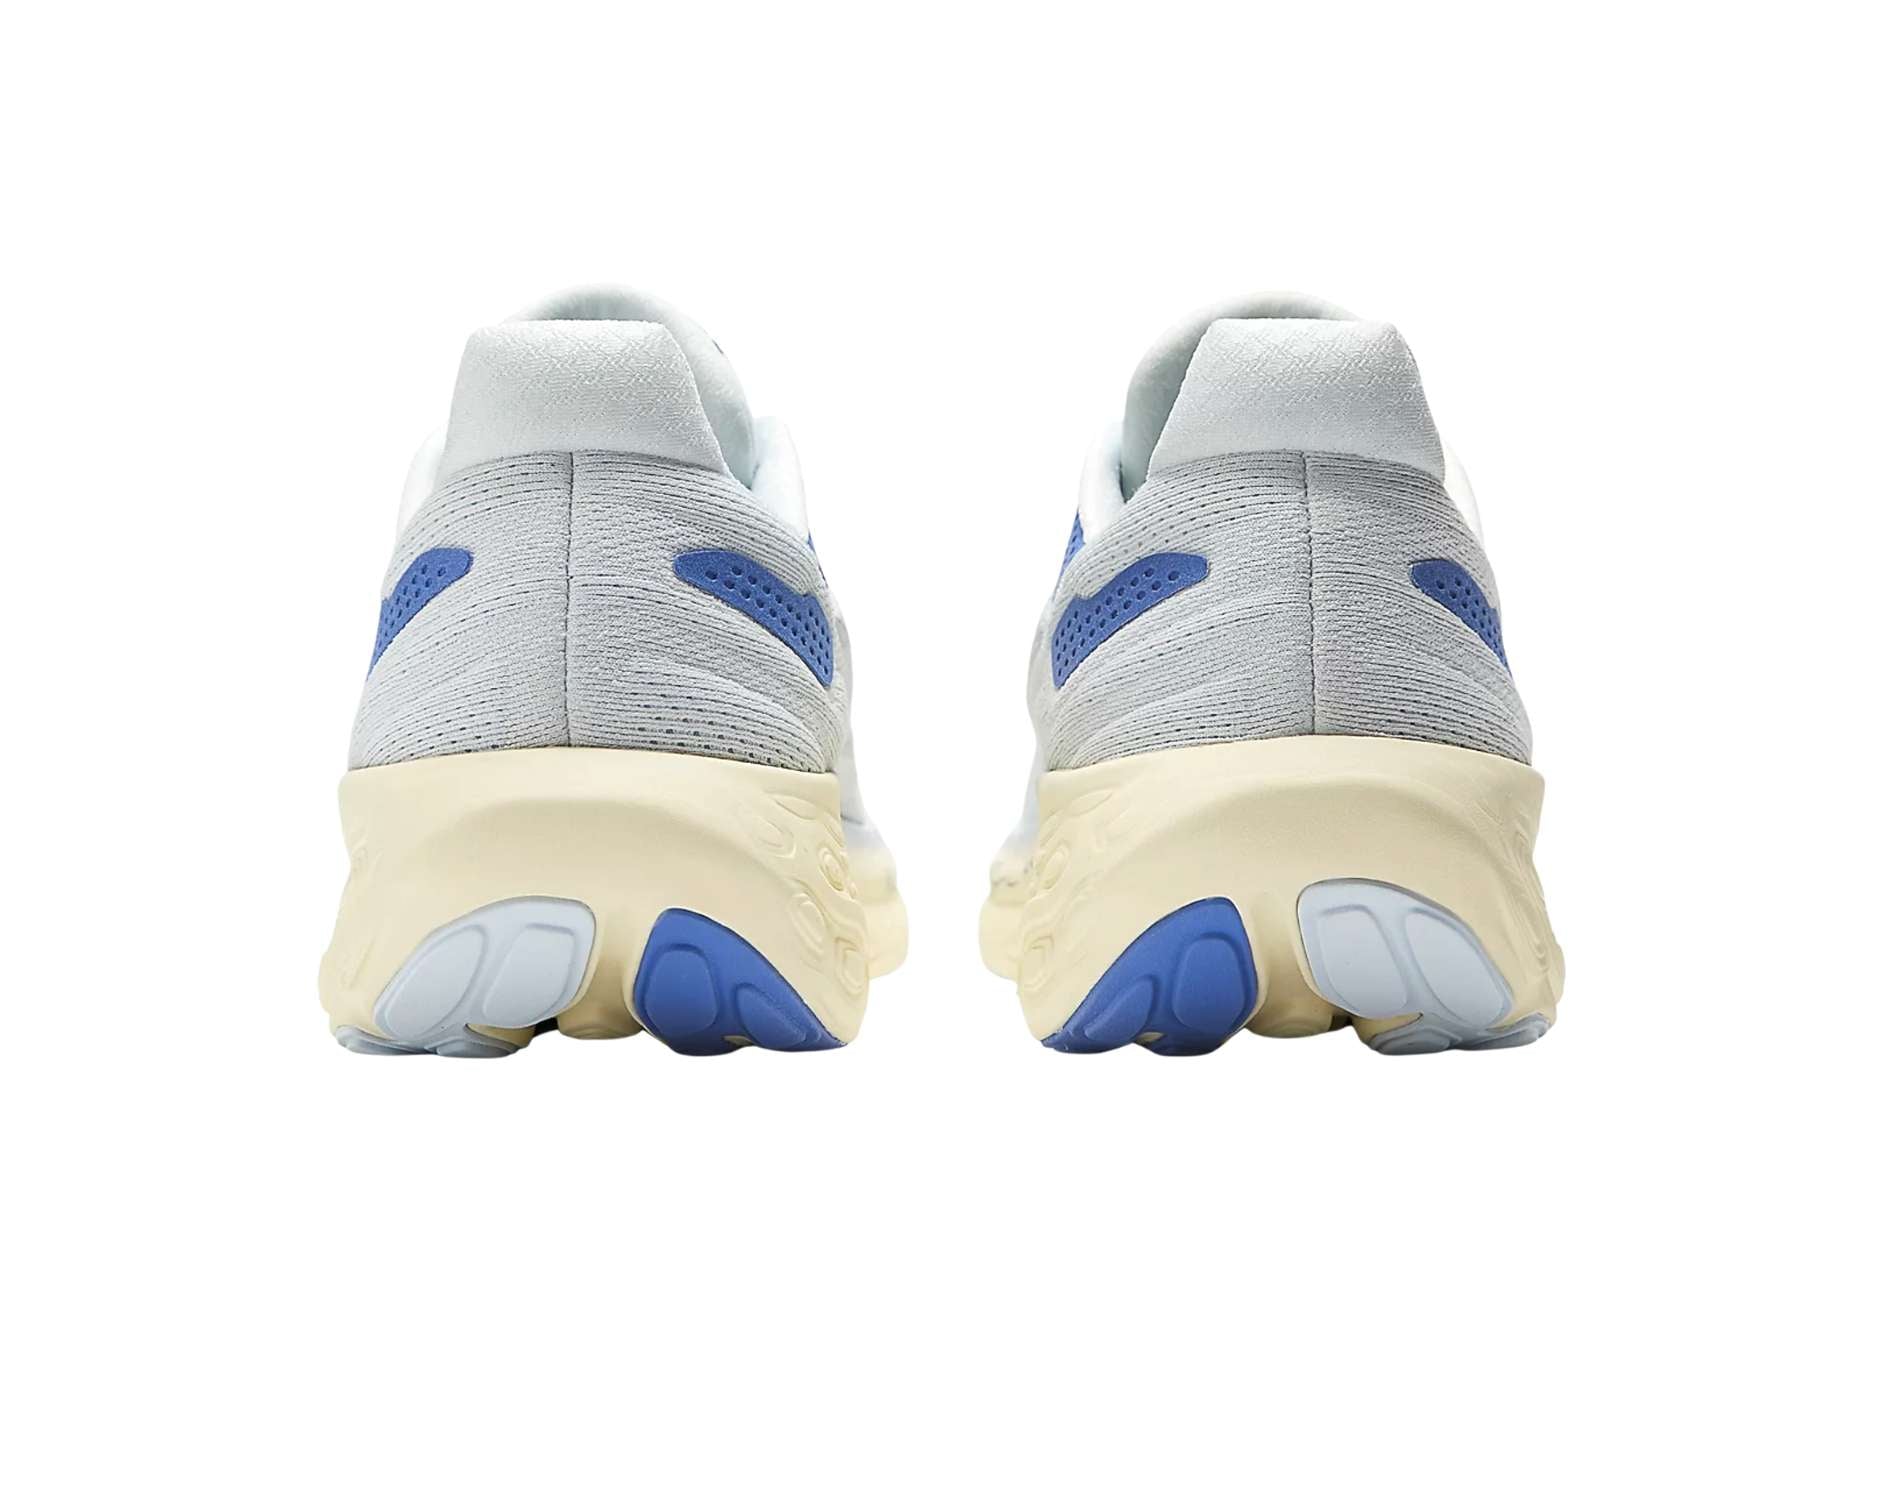 New Balance's Fresh Foam 1080 v 13 mens running shoe in d width in starlight marine blue colour